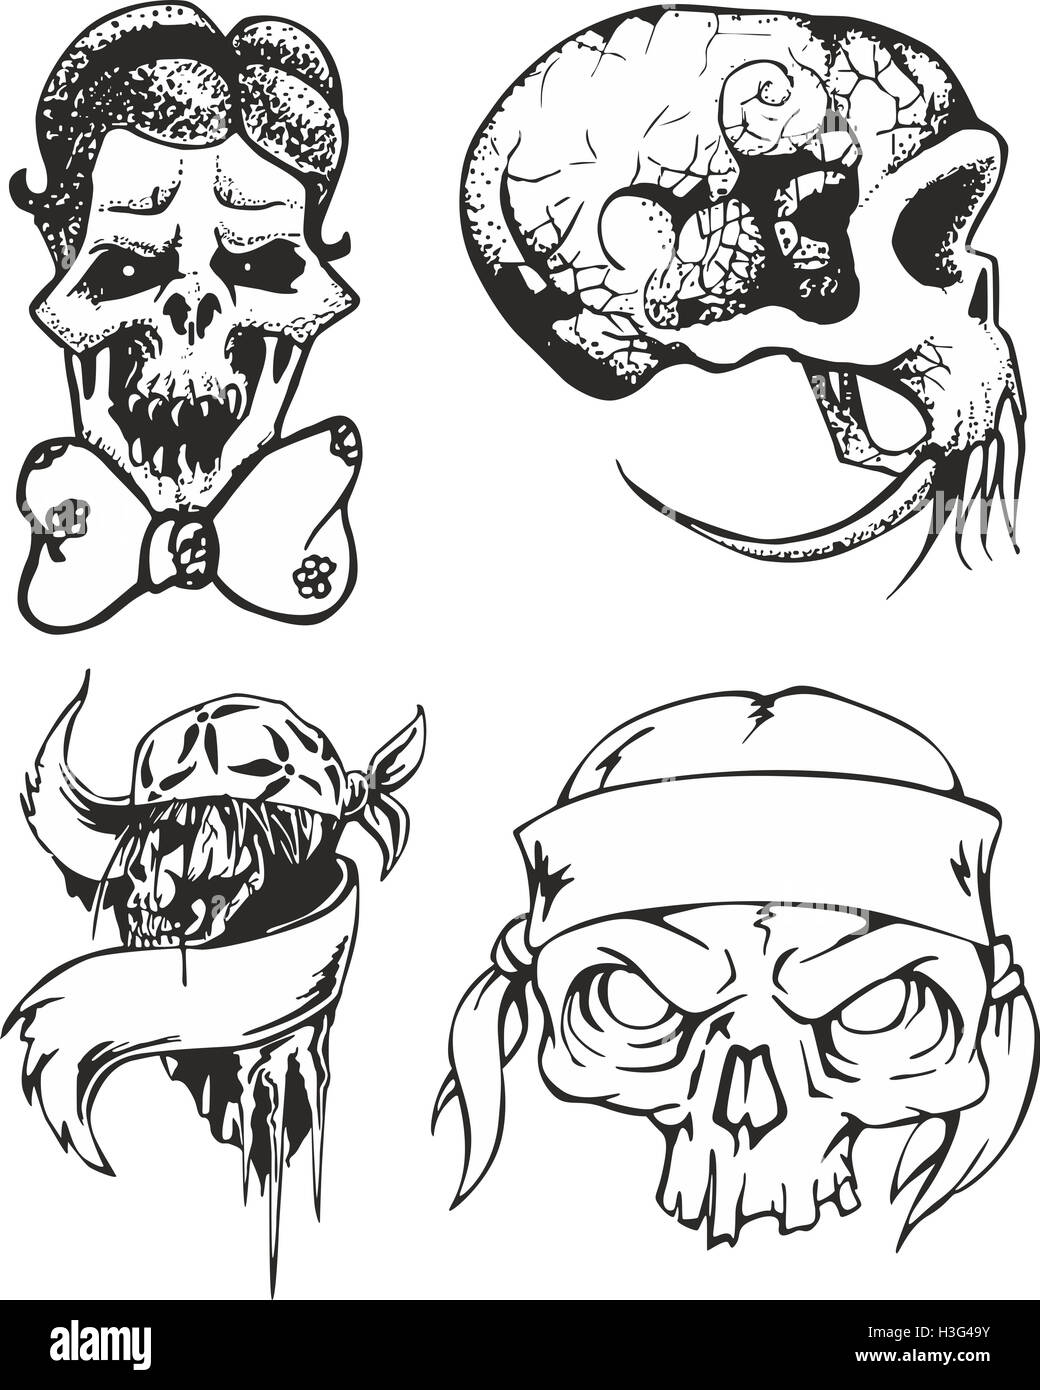 Set of fantasy tribal tattoo sketches with human skulls - joker, monster, pirate and ninja Stock Photo